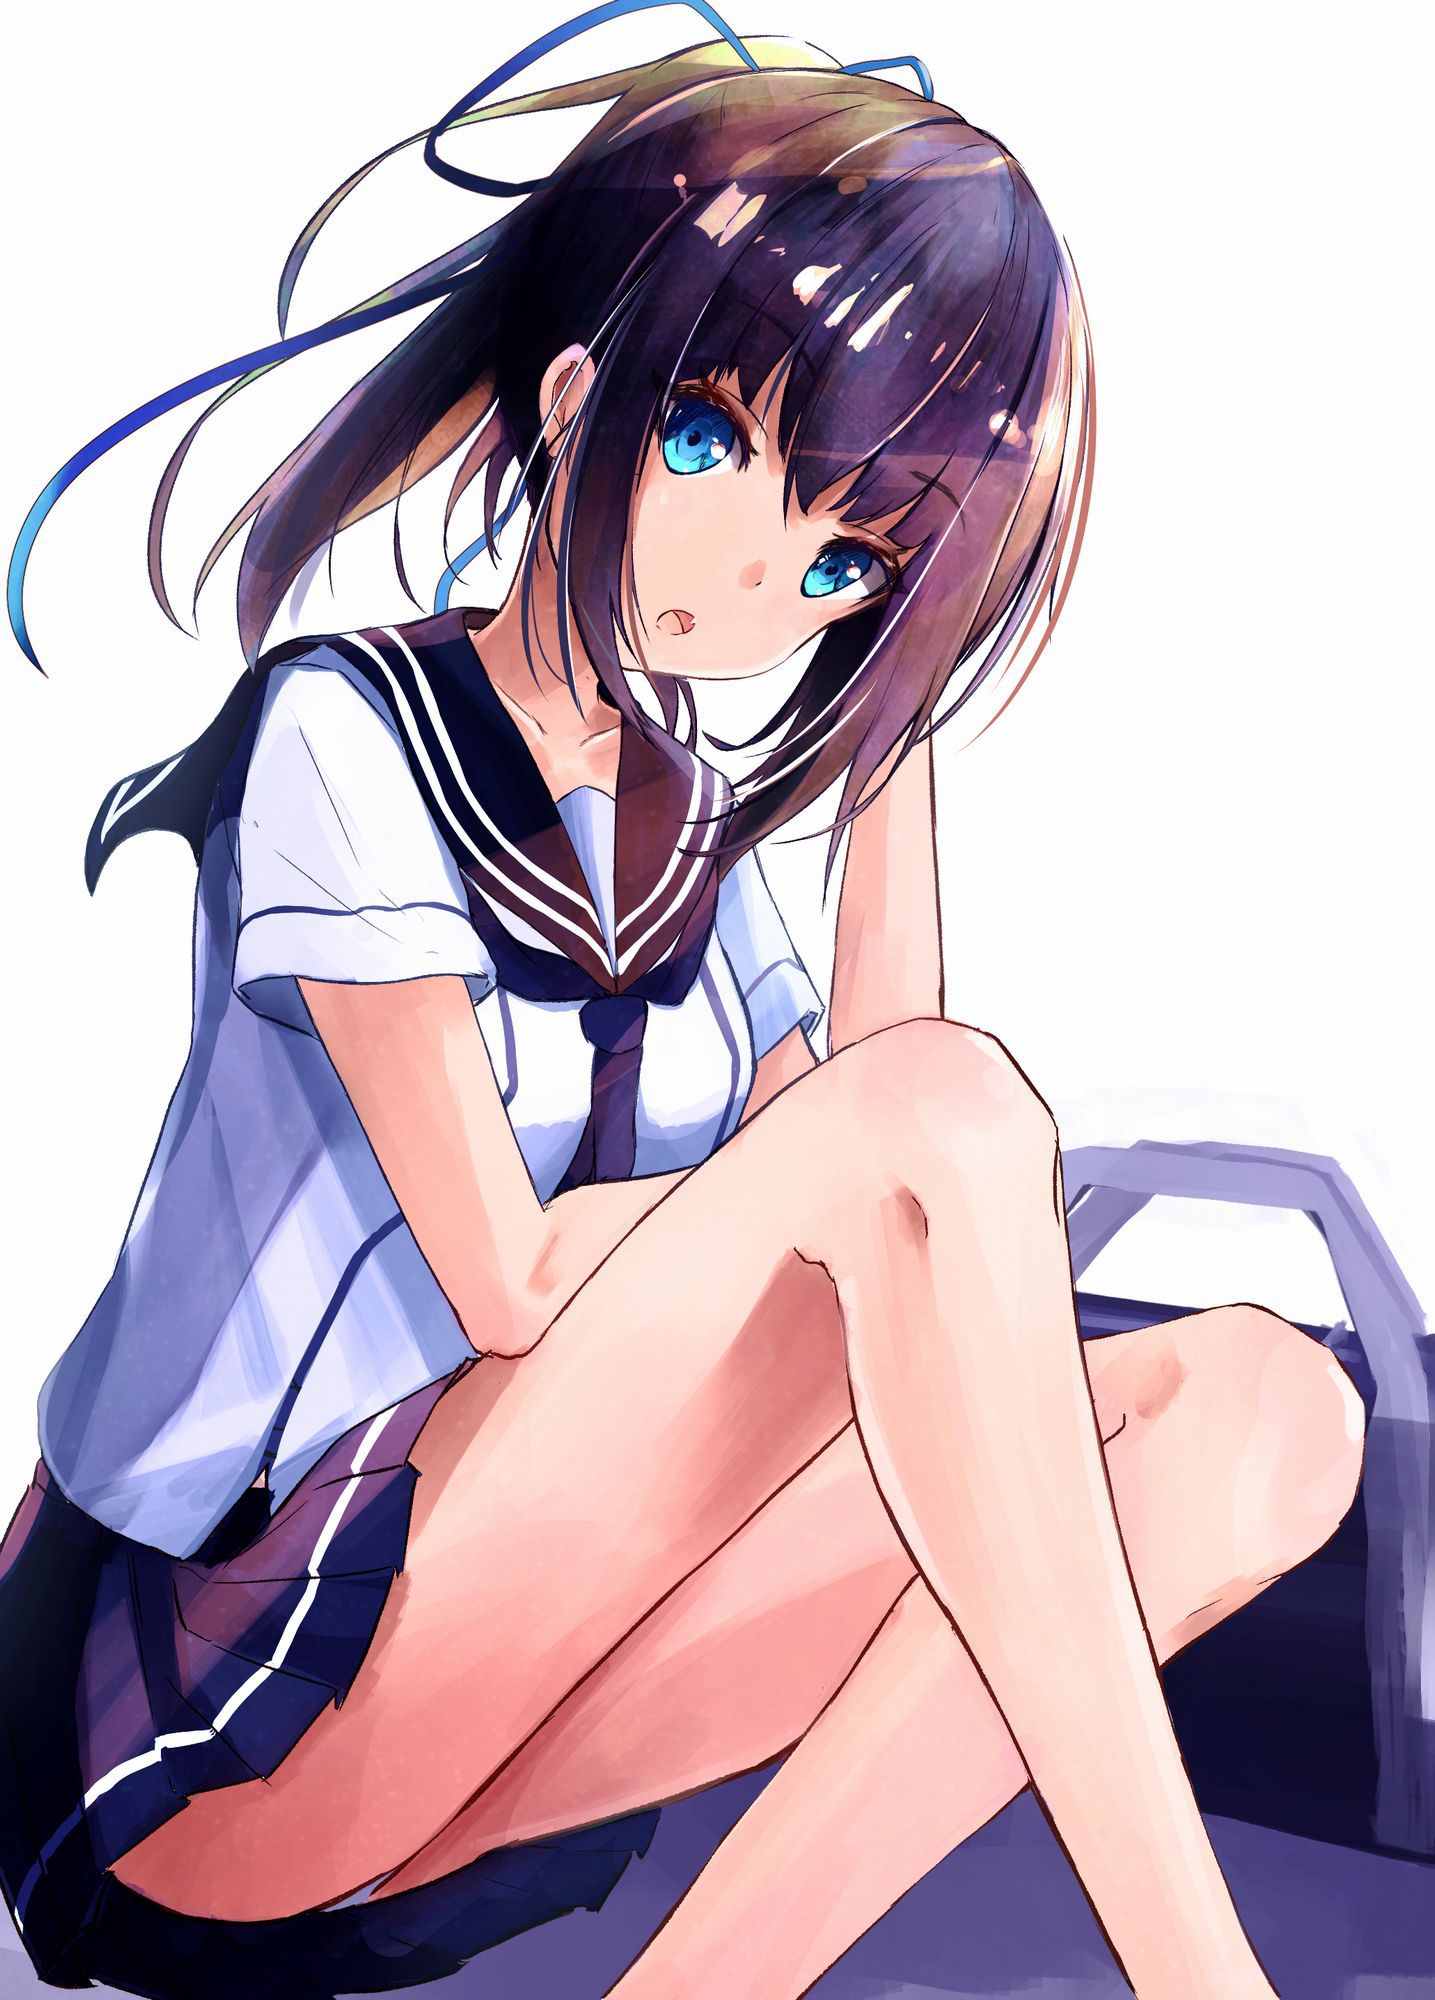 Secondary image of a cute girl in school uniform part 10 [Uniform/non-erotic] 33